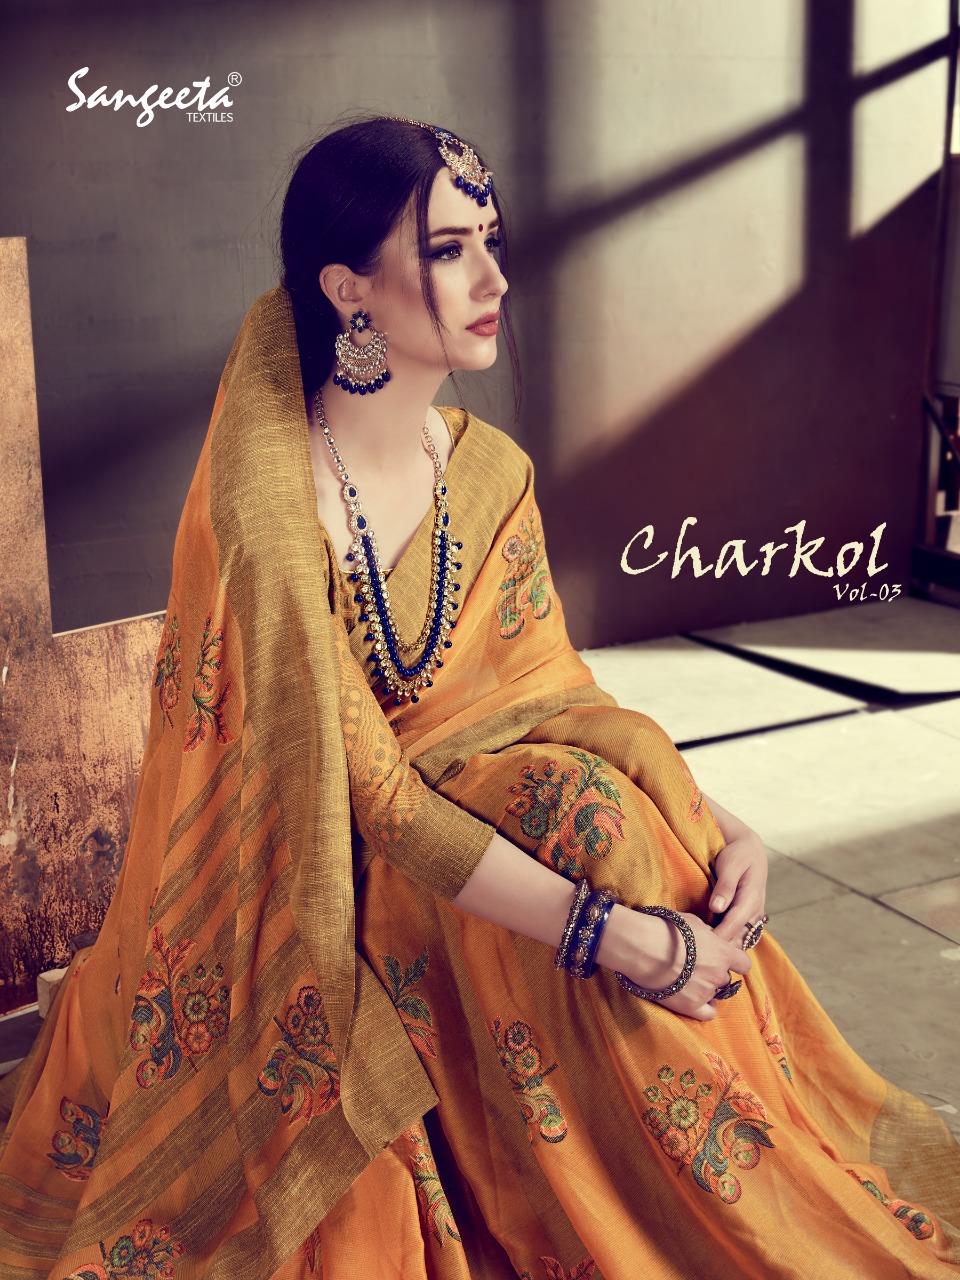 Sangeeta Textiles Charkol Vol 3 Designer Printed Silk Sarees...